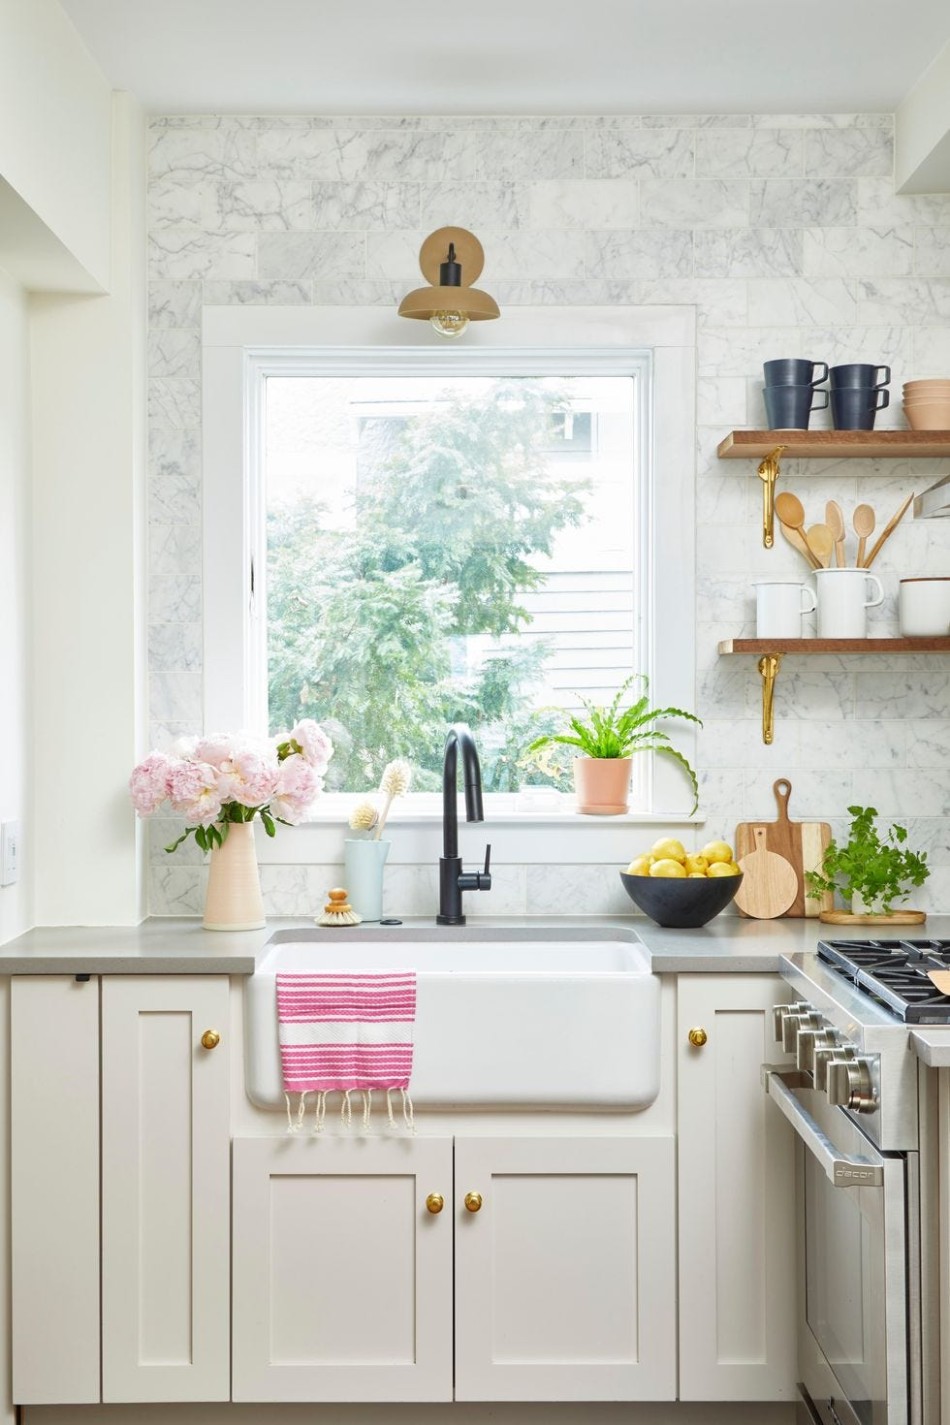 4 Best Small Kitchen Design Ideas - Tiny Kitchen Decorating - basic small kitchen designs